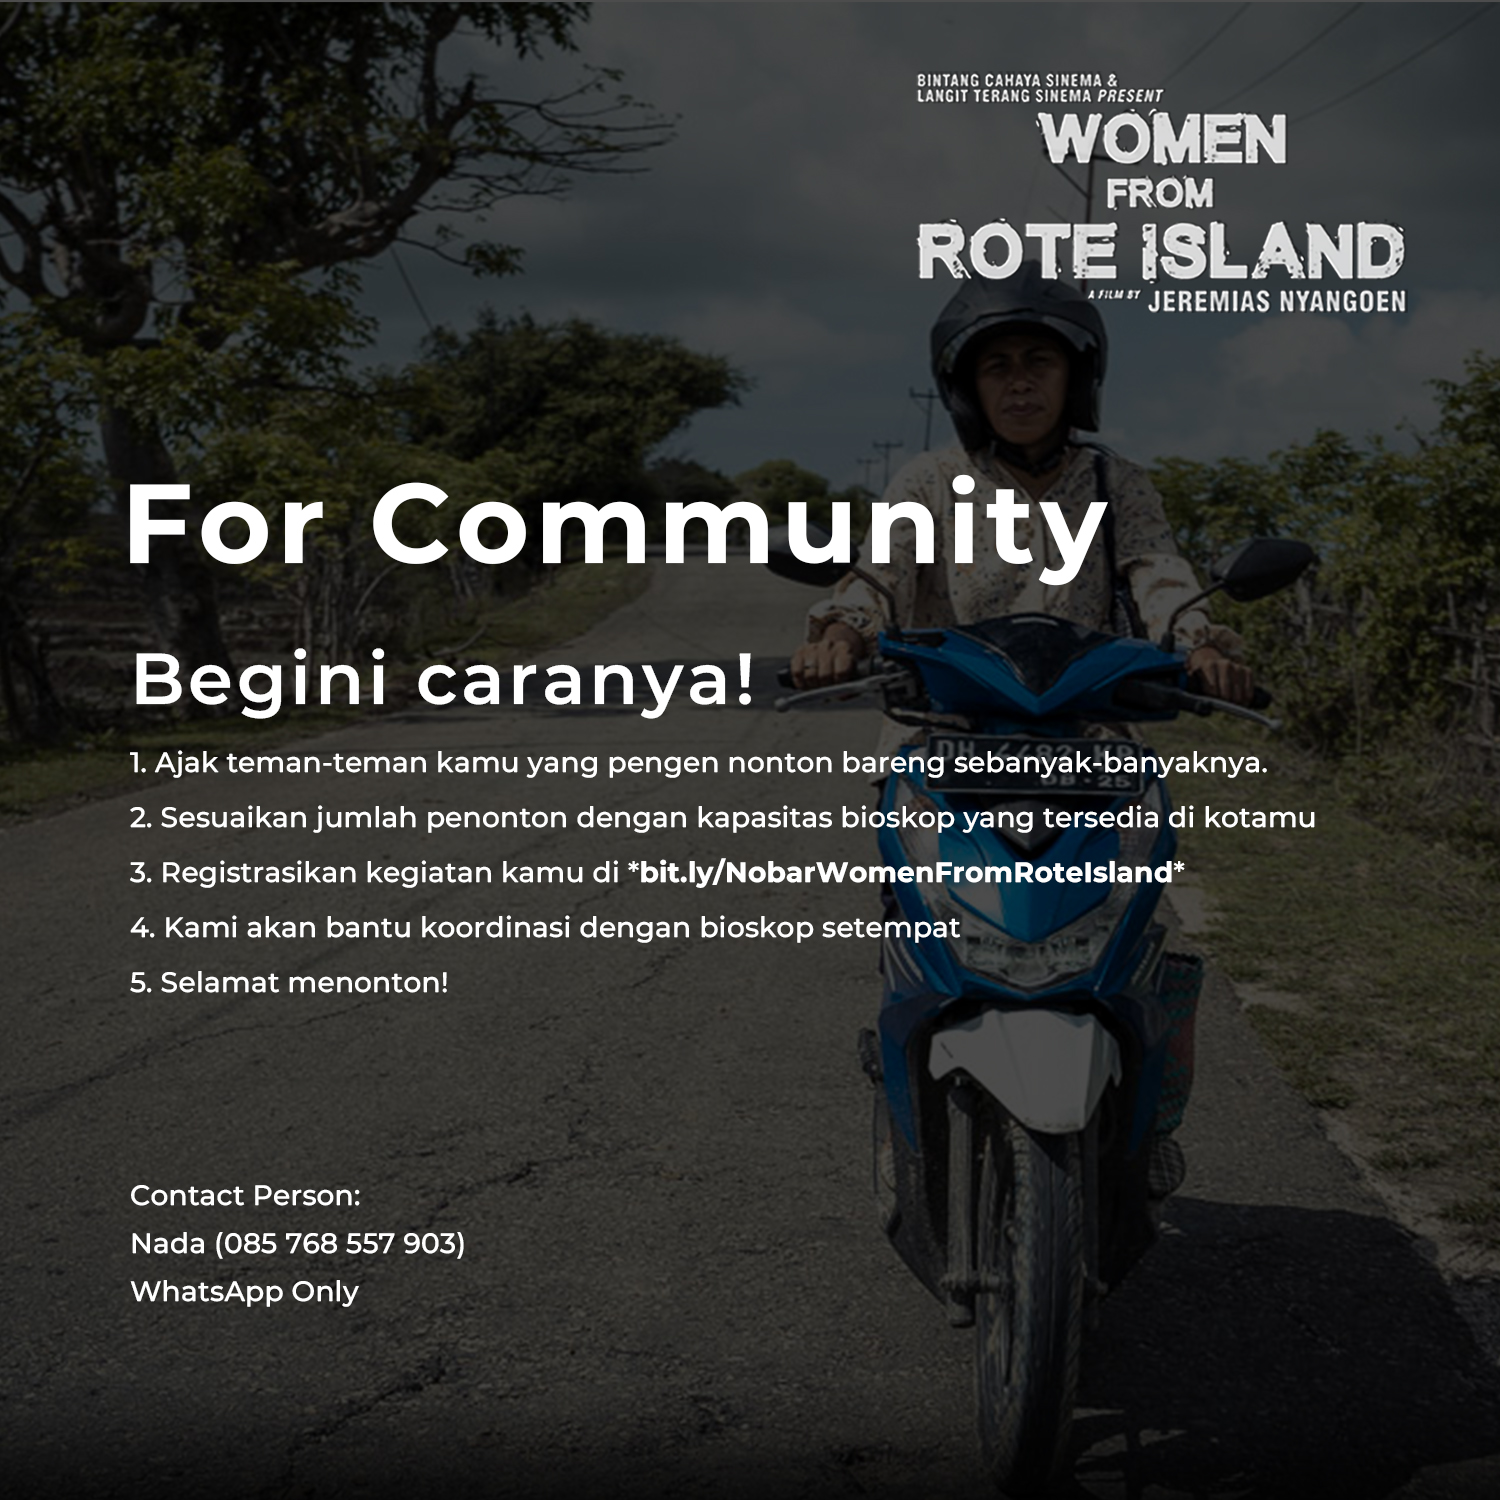 Perjuangan Women from Rote Island